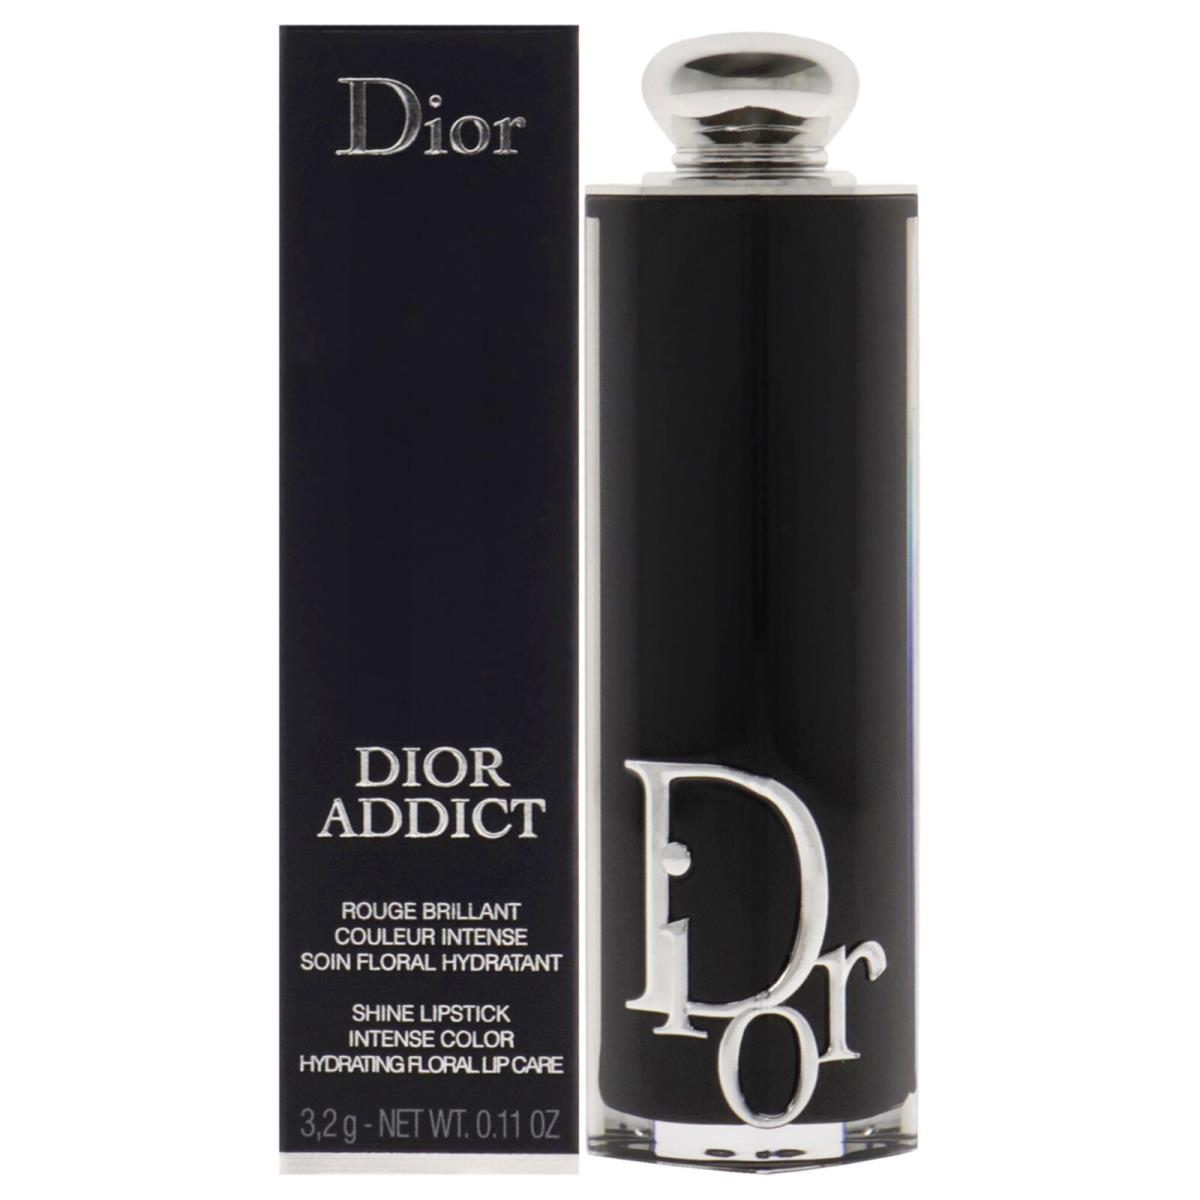 Dior Addict Hydrating Shine Lipstick - 976 Be Dior by Christian Dior 0.11 oz